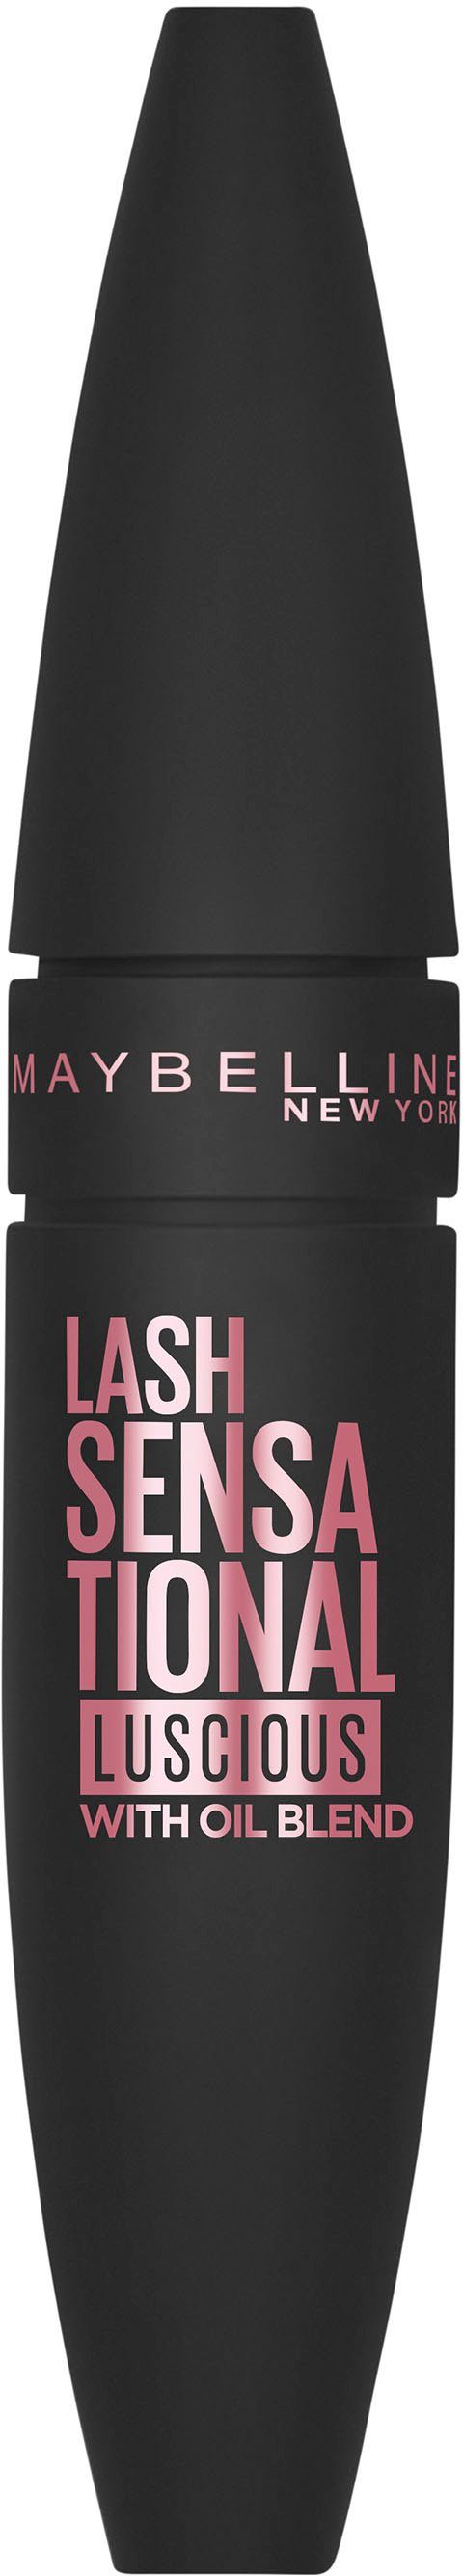 Sensational NEW MAYBELLINE YORK Mascara Lash Luscious